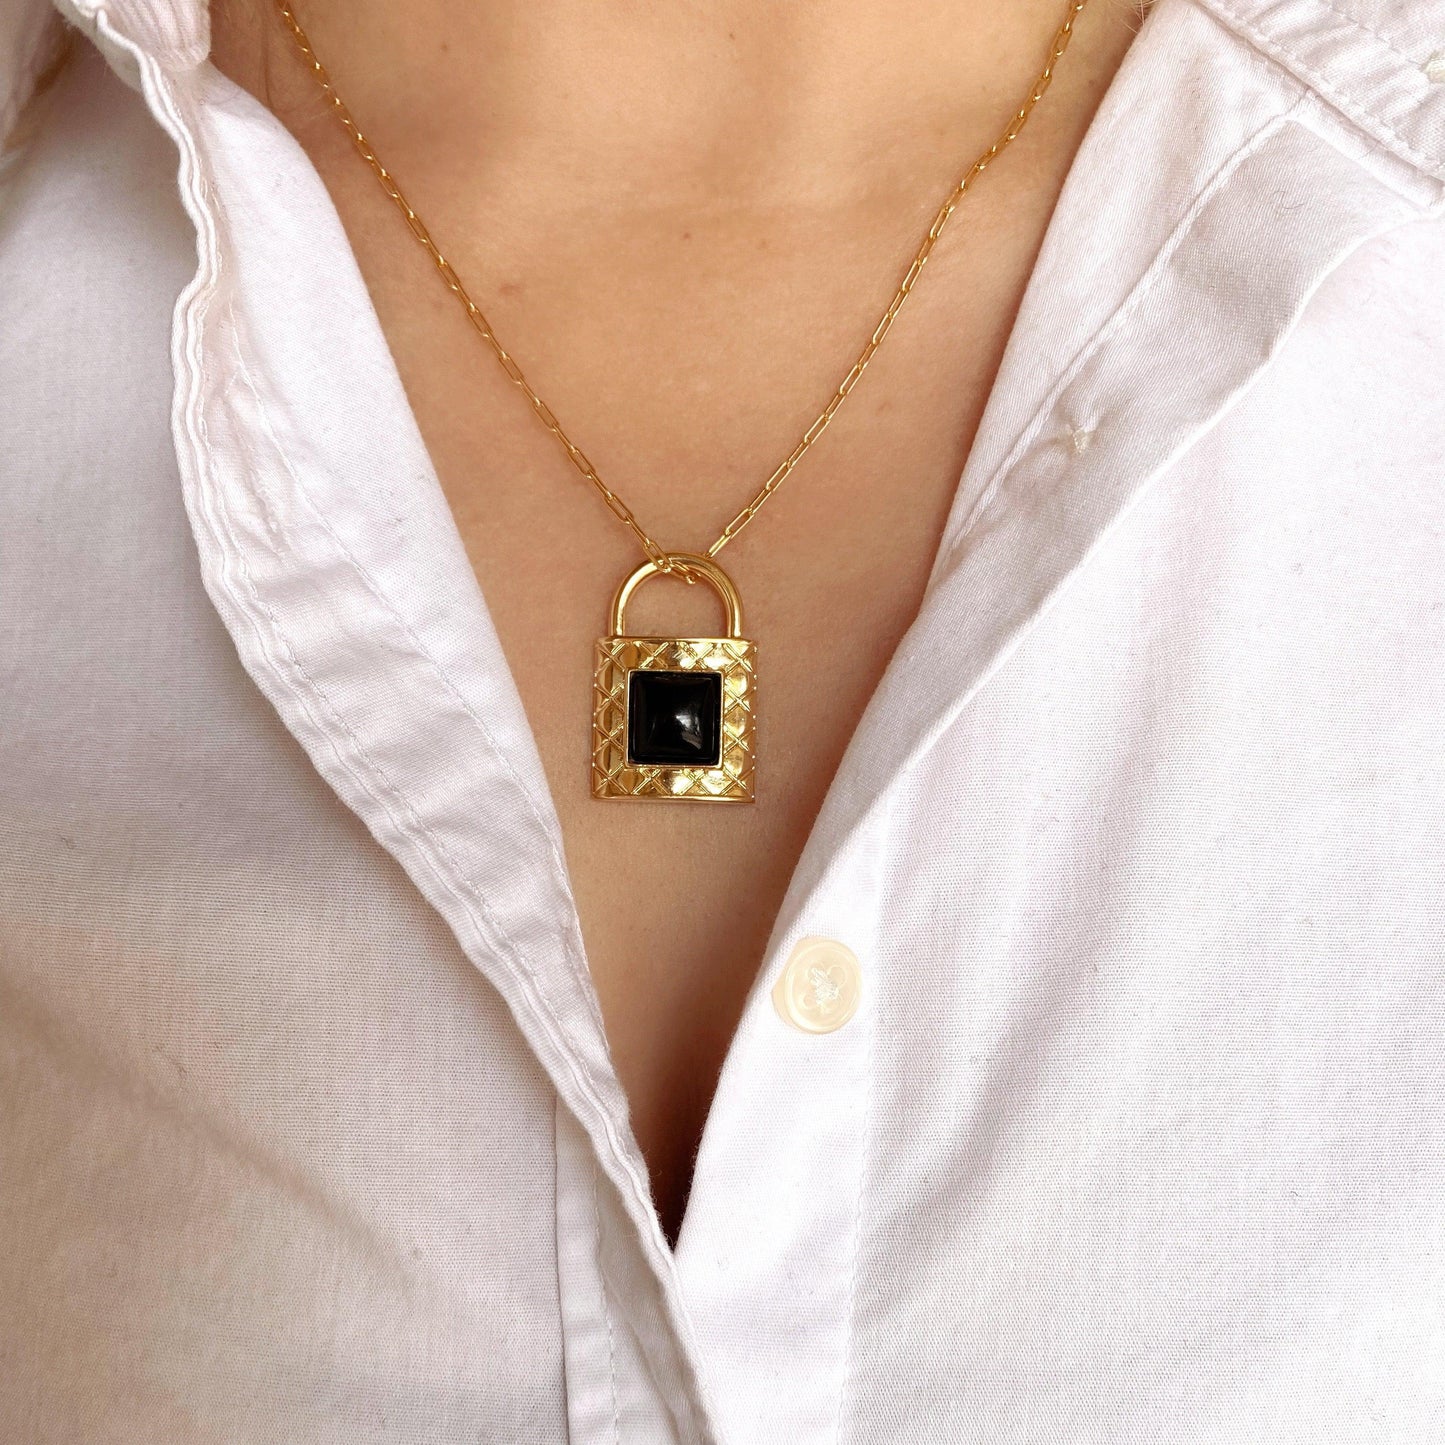 GoldFi 18k Gold Filled Diamond Cut Pattern Lock Pendant